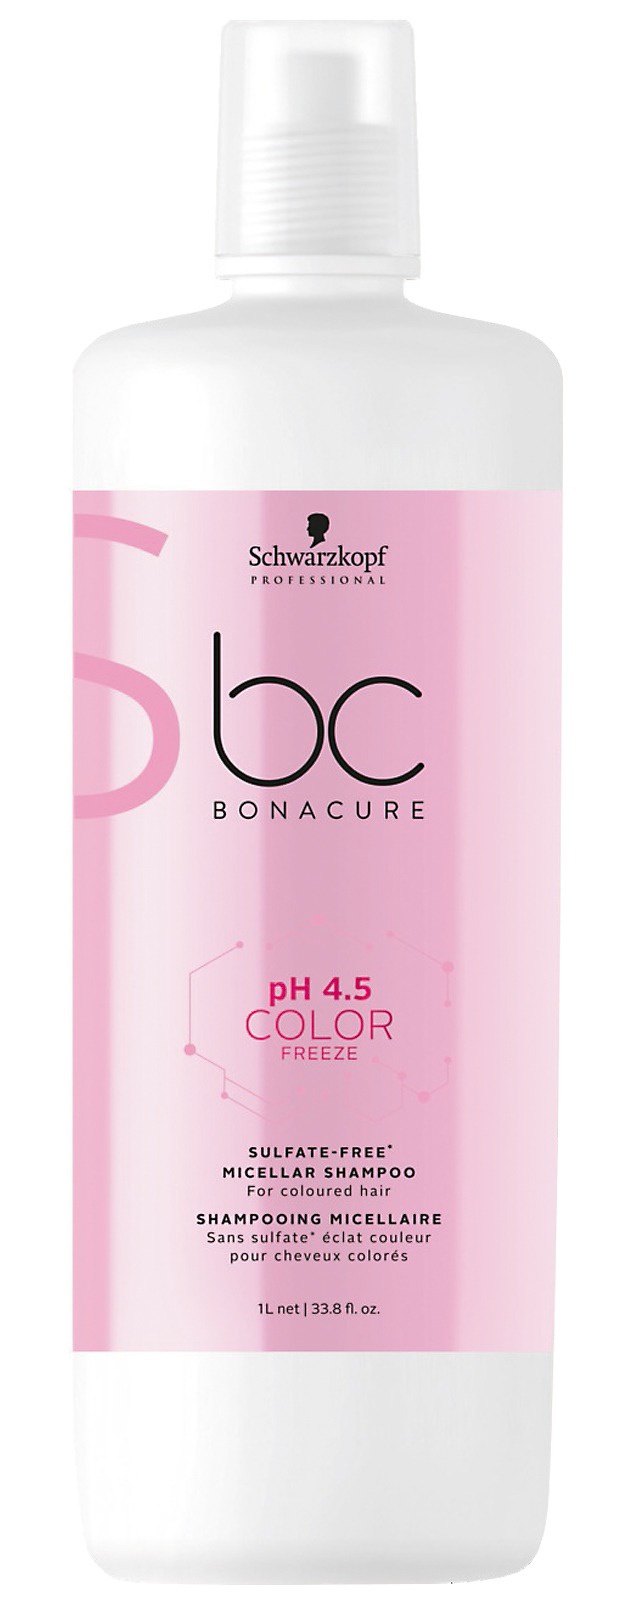 Schwarzkopf Professional BC Schwarzkopf Professional Bonacure Ph 4.5 Color Freeze Sulfate Free Micellar Shampoo